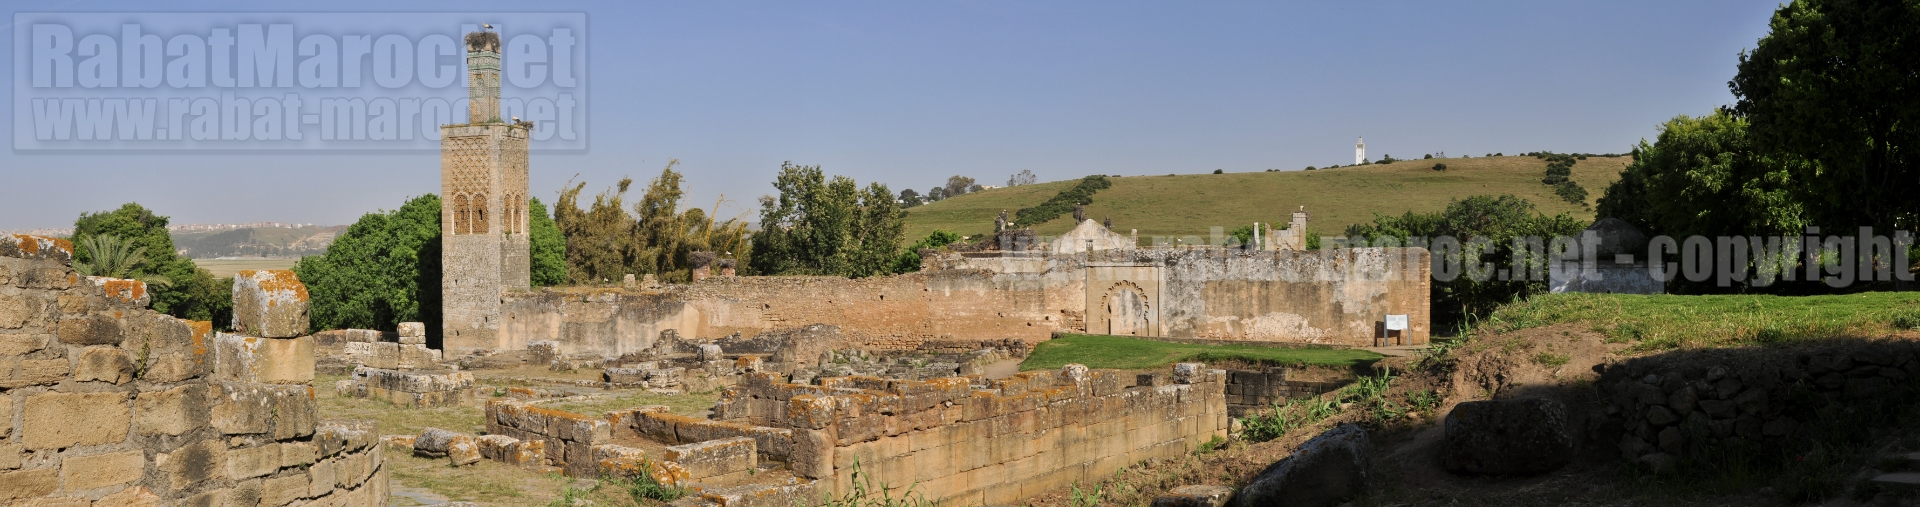 chellah ruines romaines 1er plan